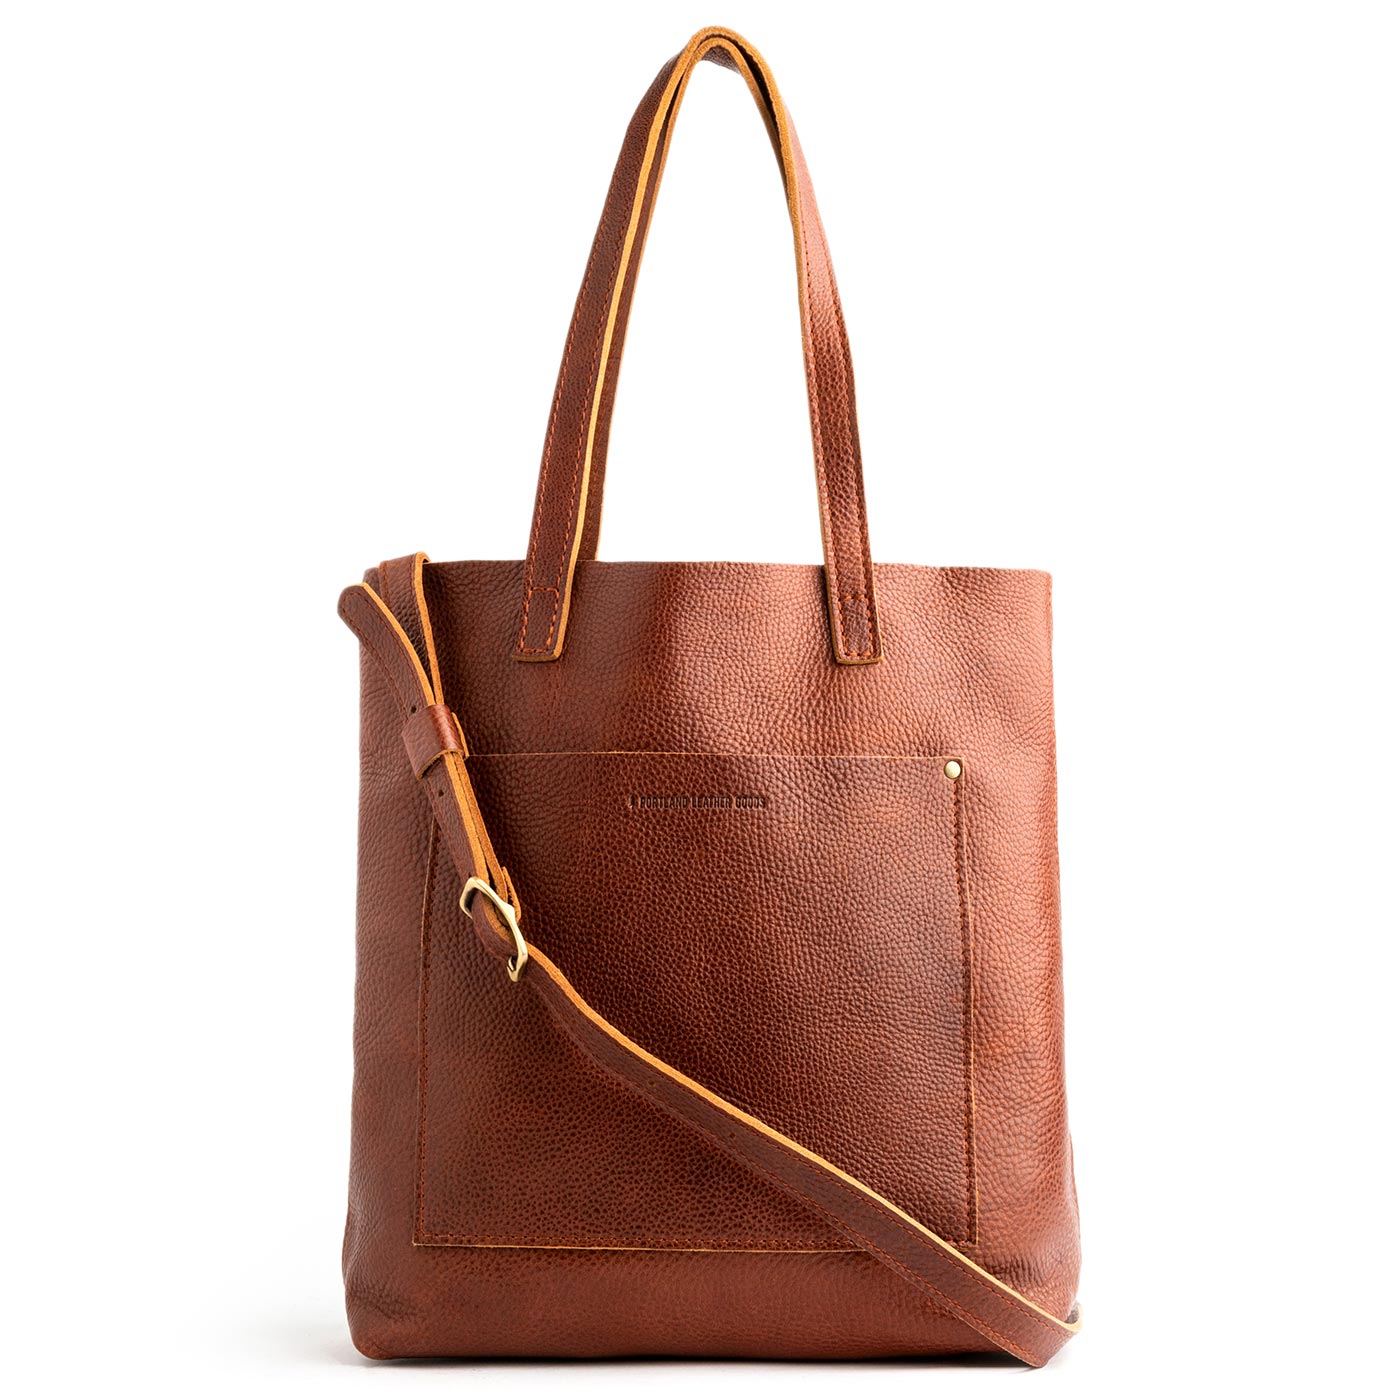 Small shoulder bag - Cognac brown - Ladies | H&M IN